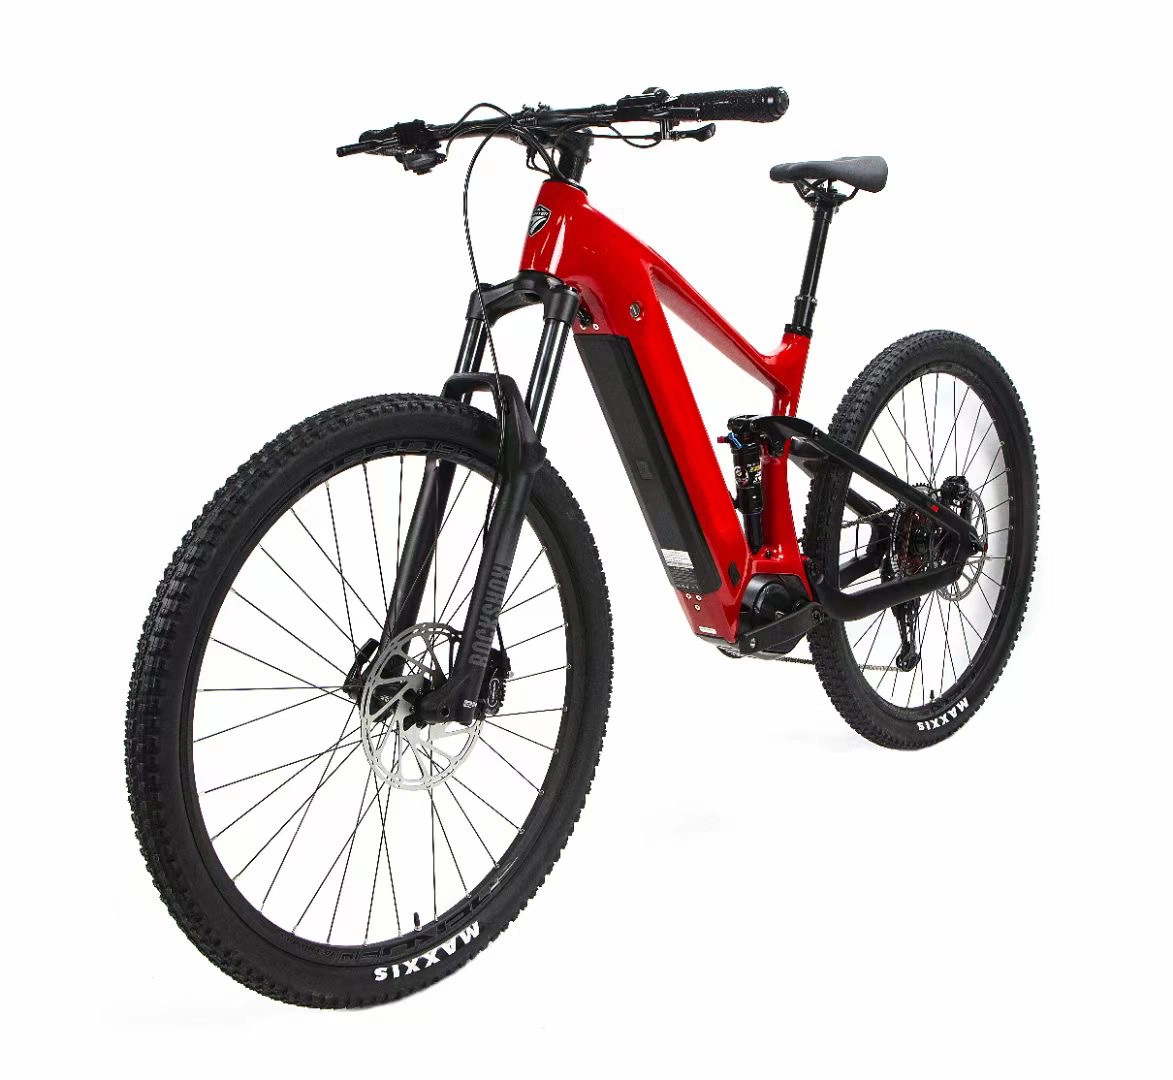 Carbon Bike 27.5 بوصة شهادة CE MID Drive MTB Full تعليق الدراجة الكهربائية الجبلية في المخزون